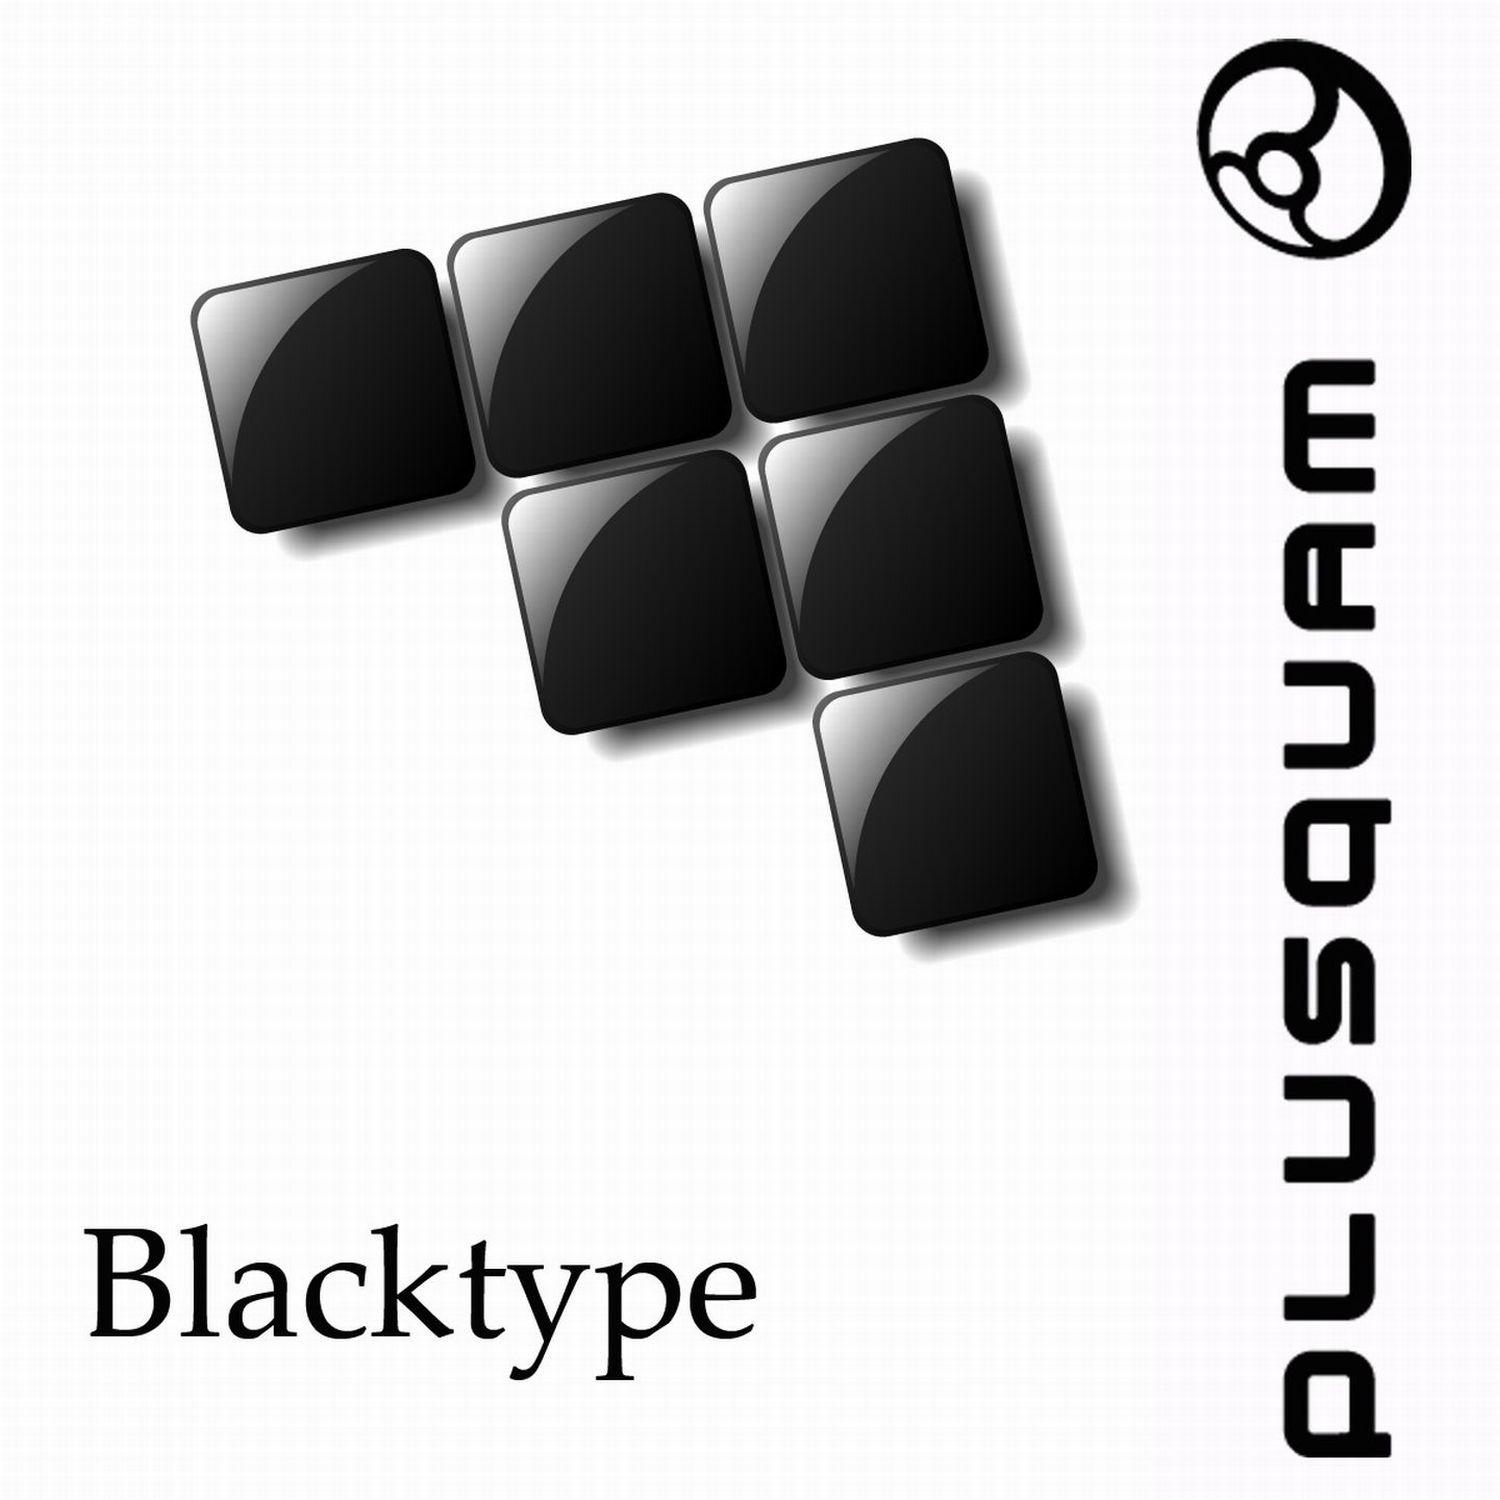 Blacktype